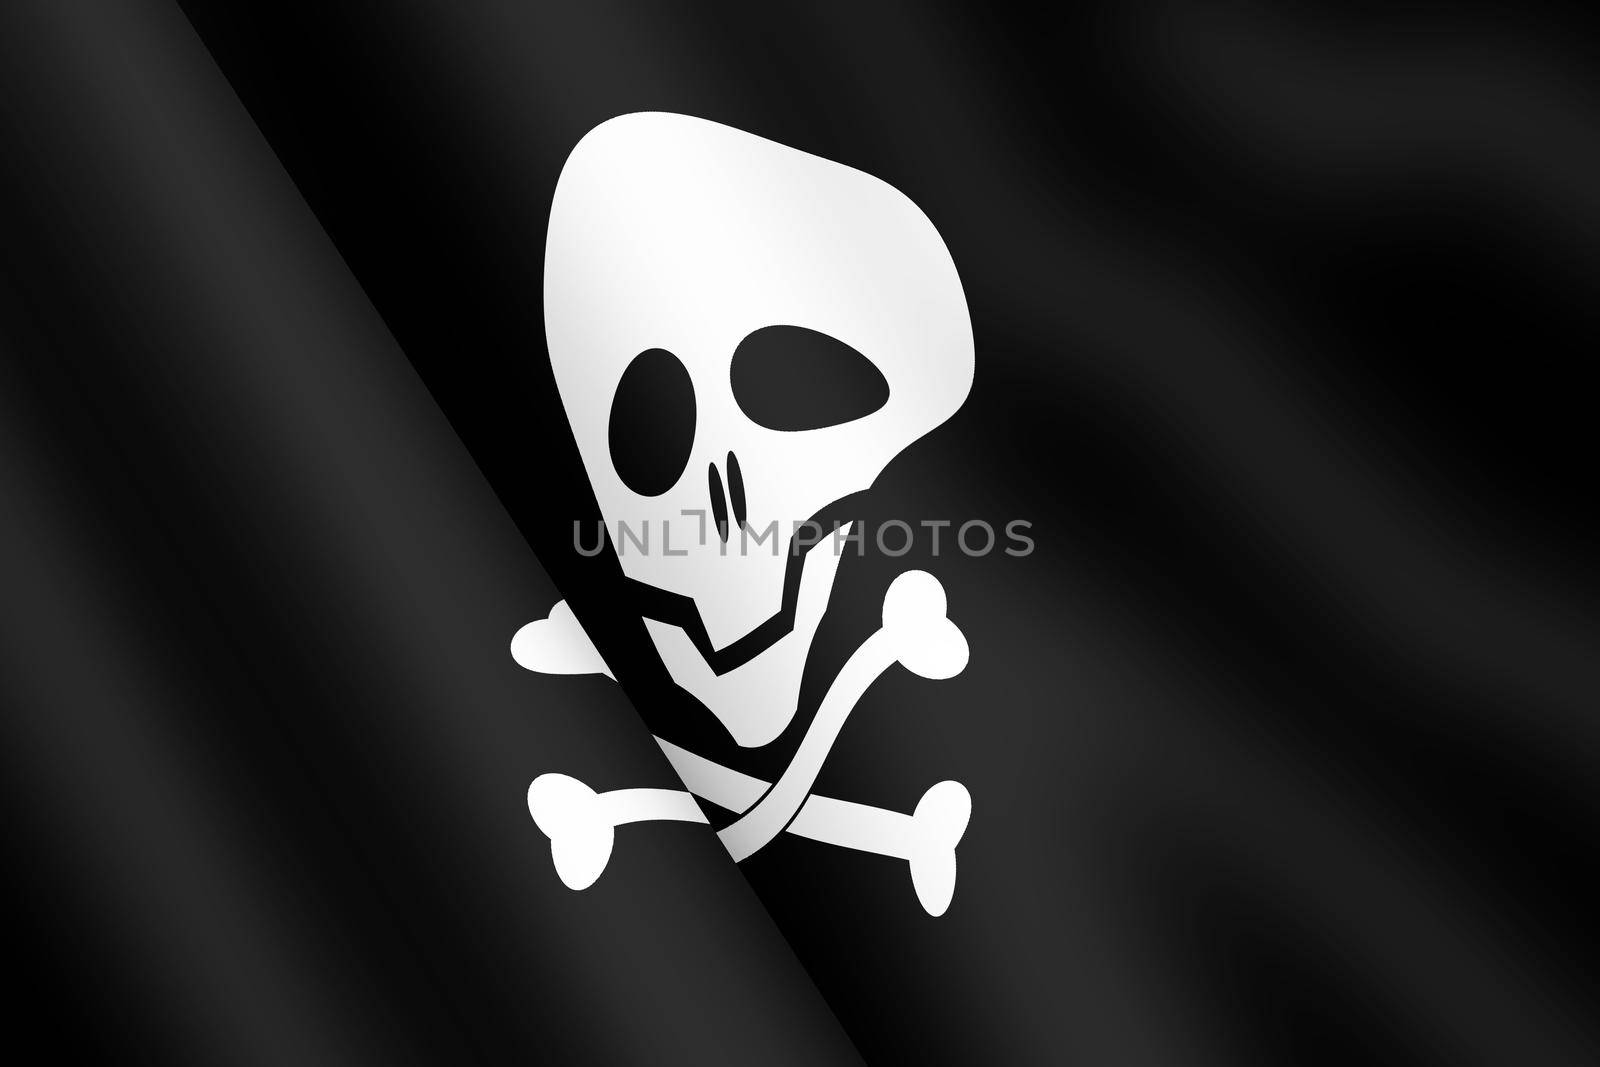 A Jolly Roger skull and cross bones pirate flag waving flag 3d illustration wind ripple